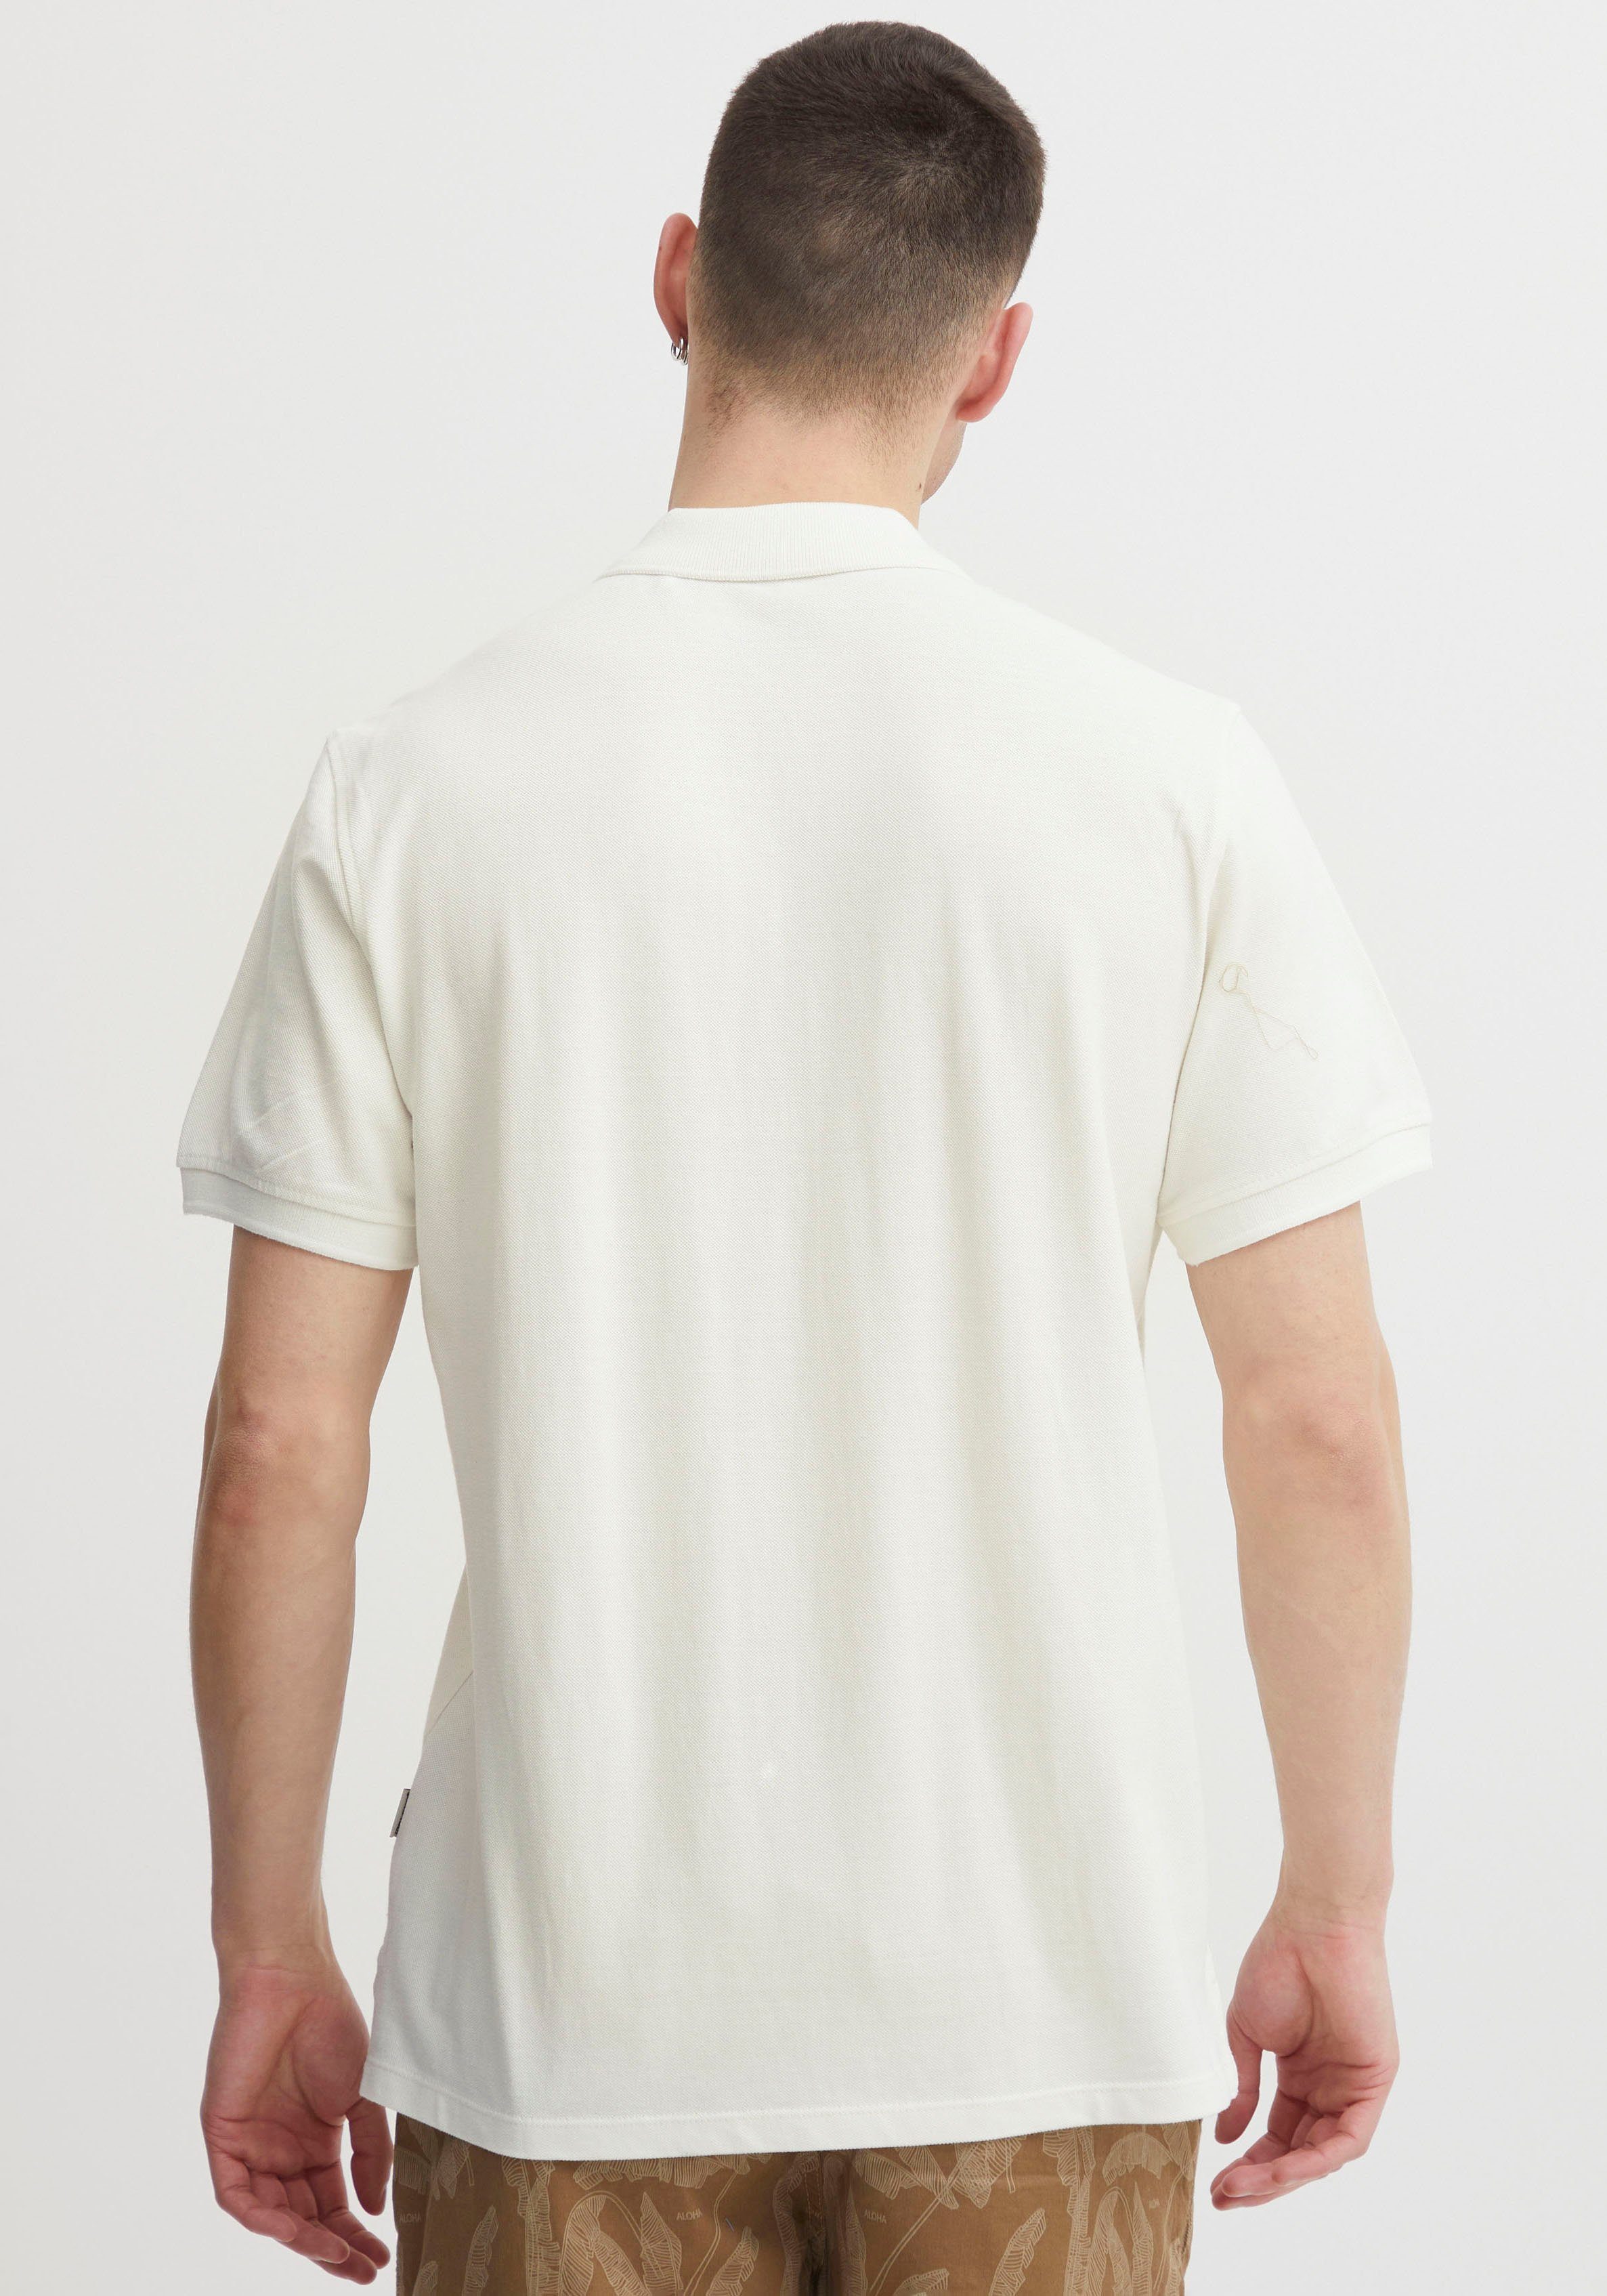 Blend white BL-Poloshirt Poloshirt